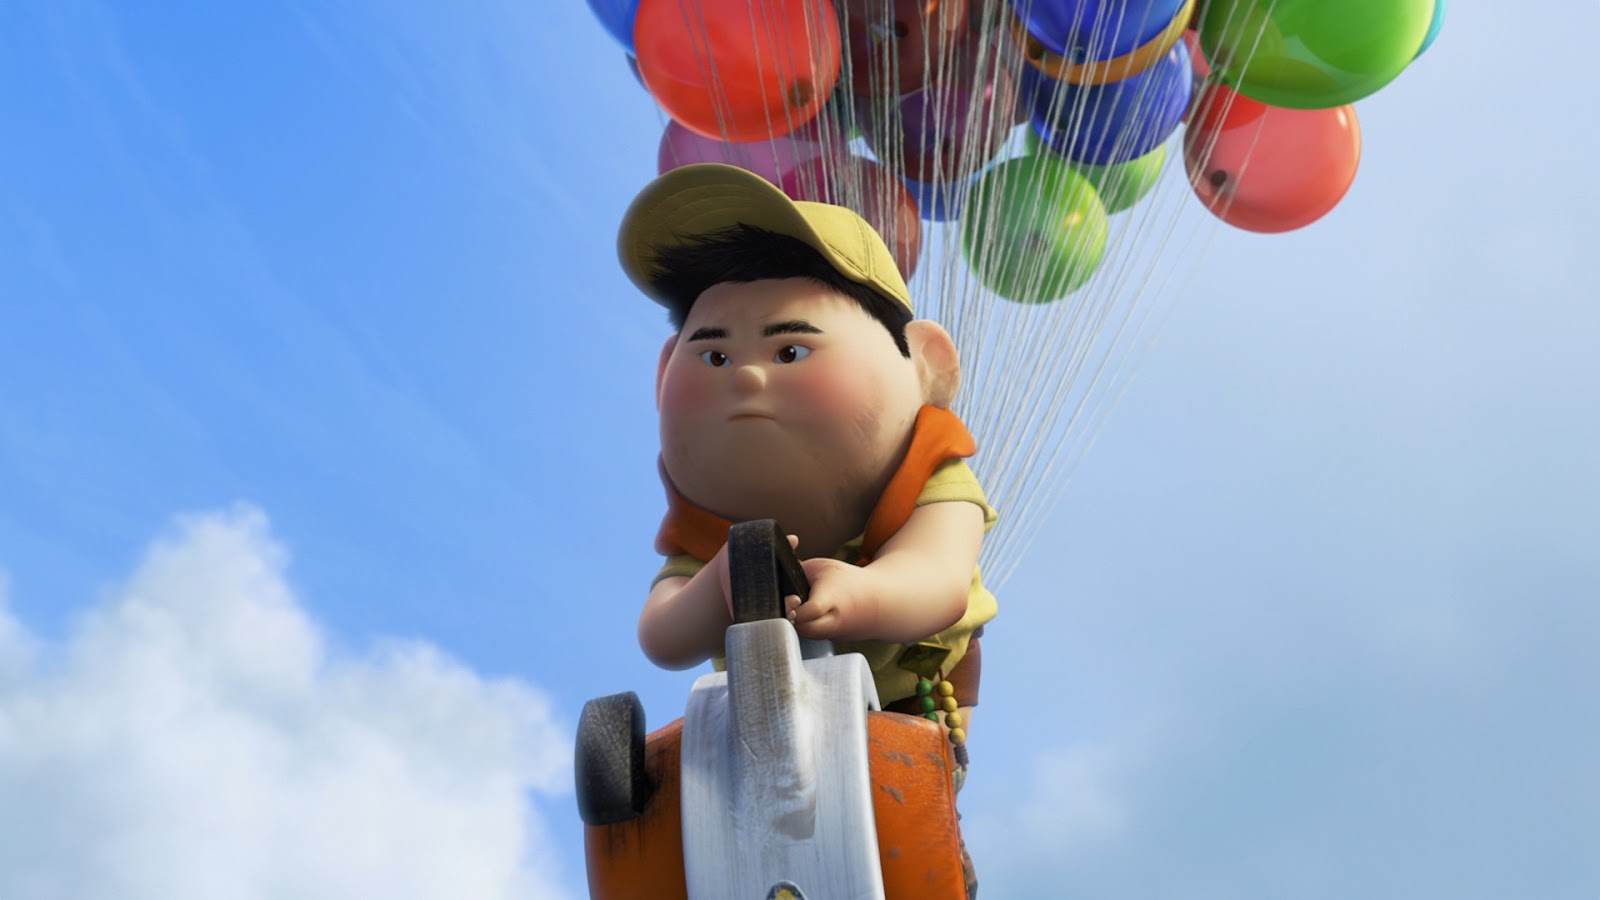 disney pixar wallpaper,balloon,party supply,sky,child,fun